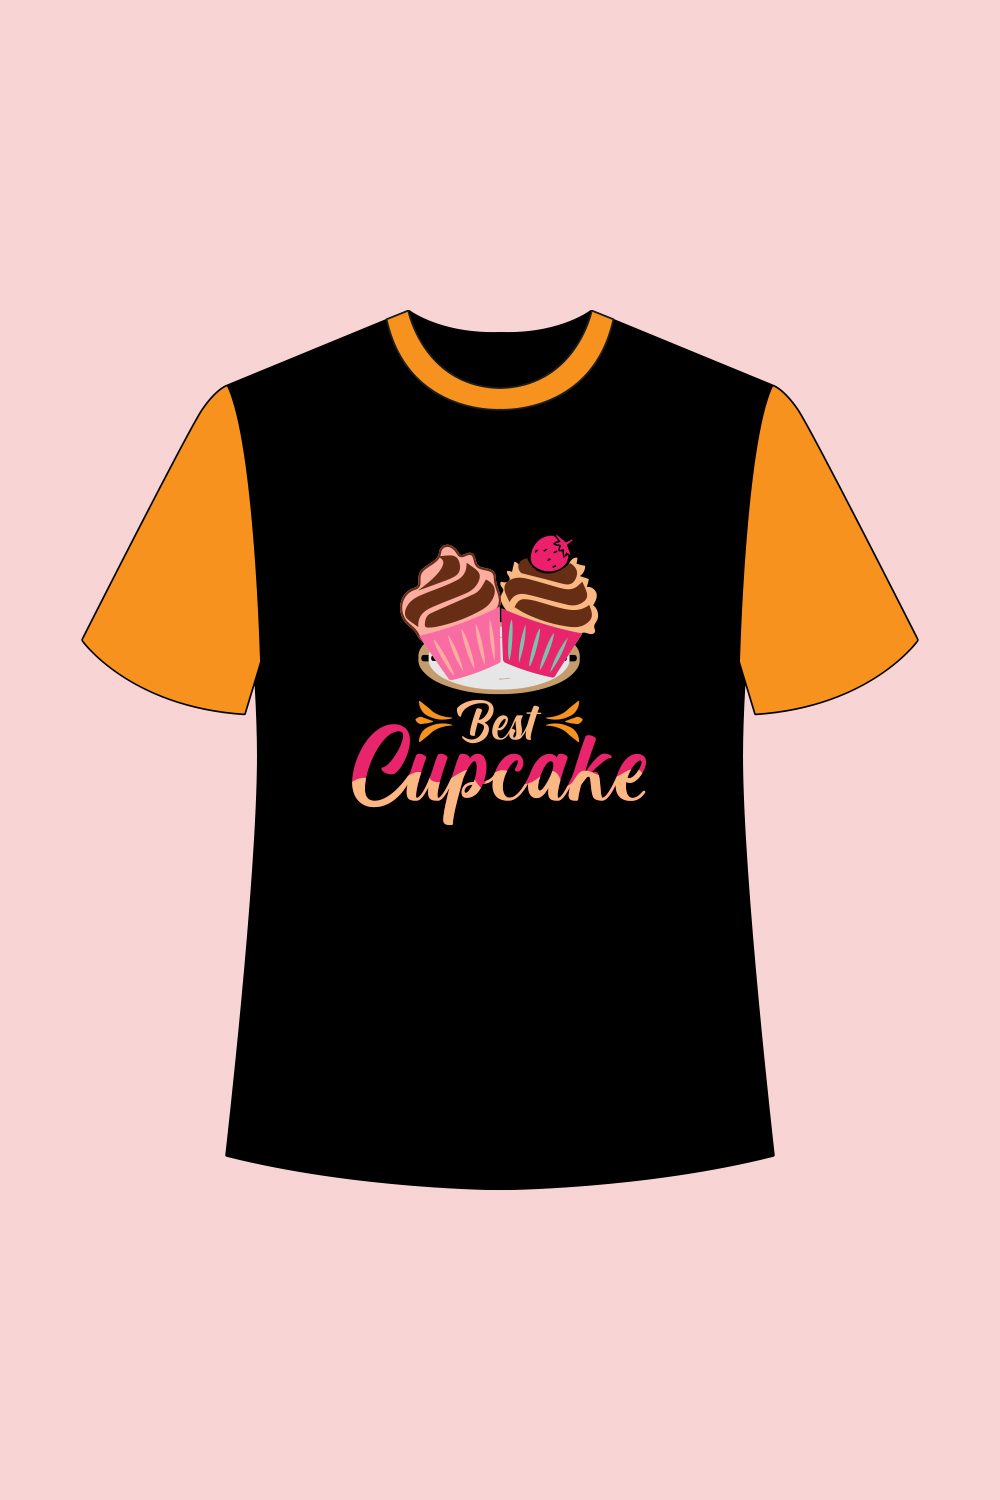 Cupcake Illustration Vector T-shirt Design pinterest image.